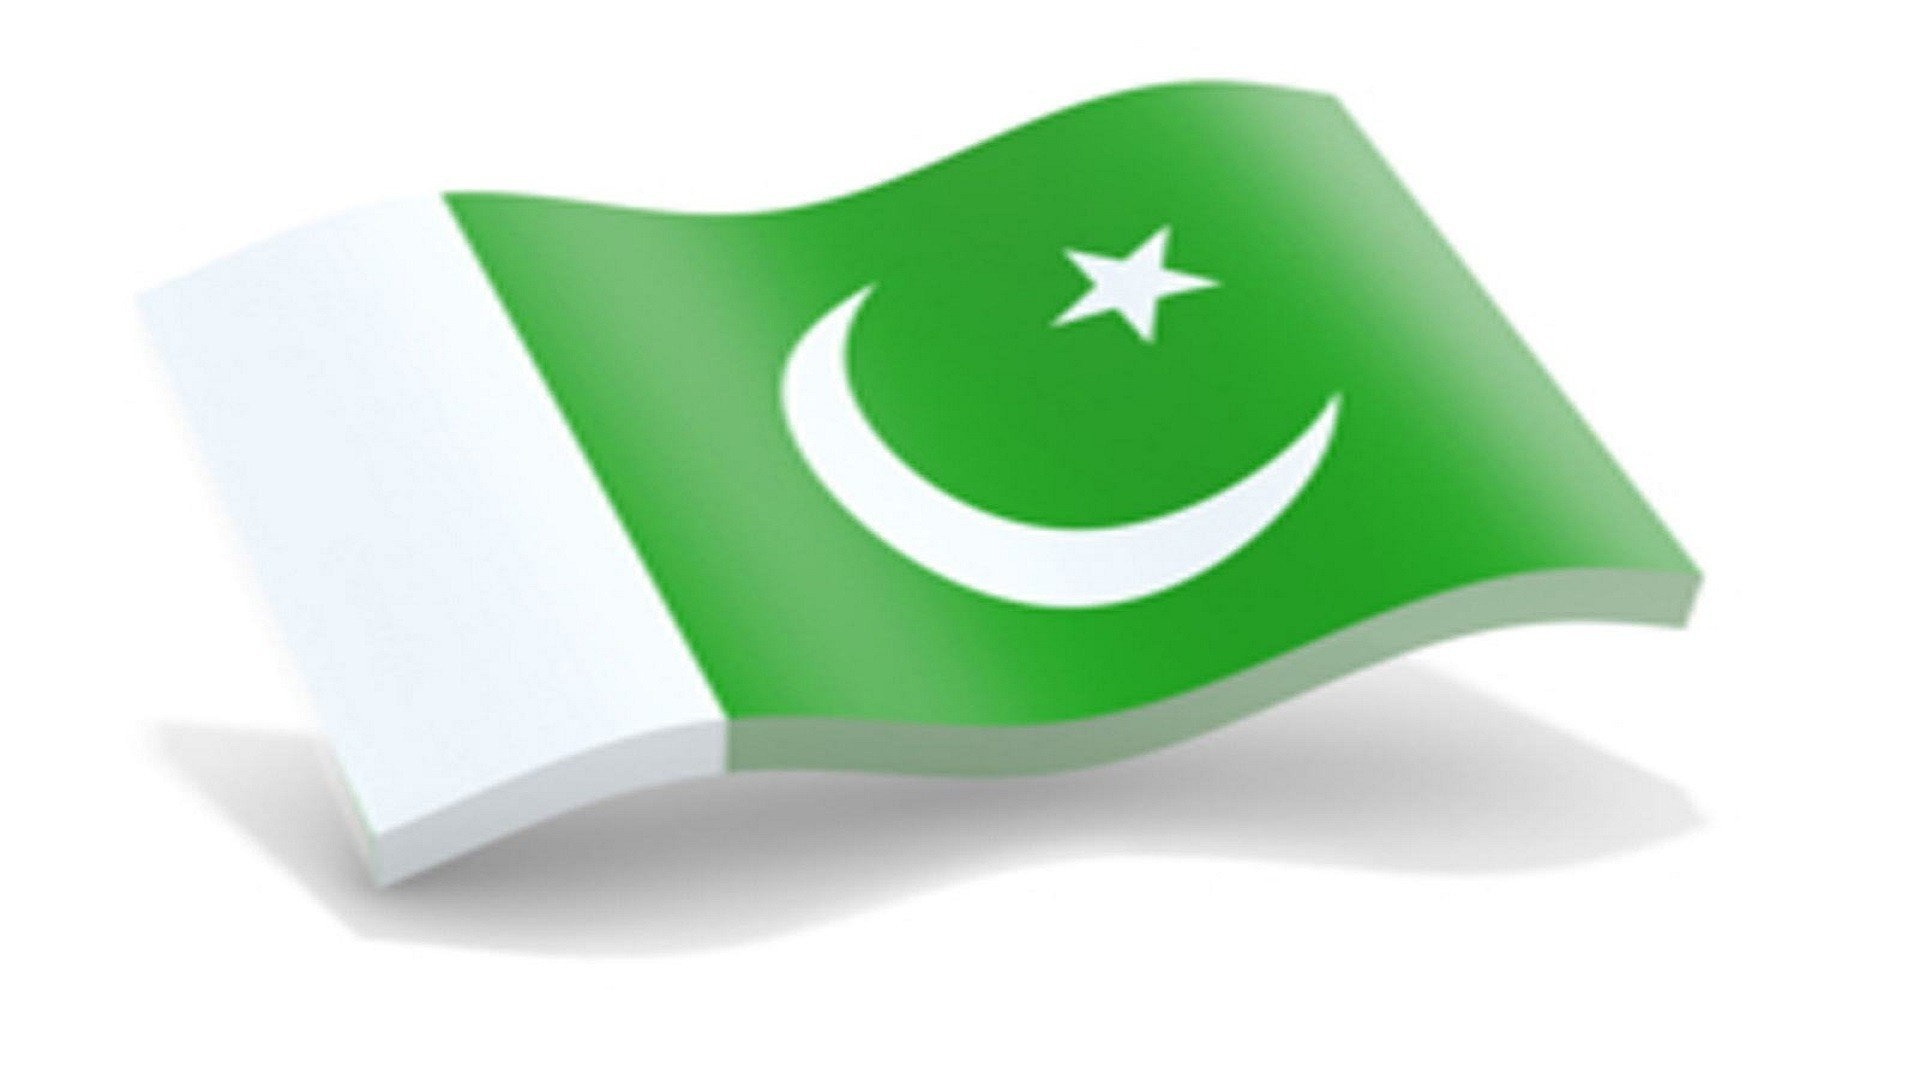 Pakistan Flag Wallpapers HD 2018.